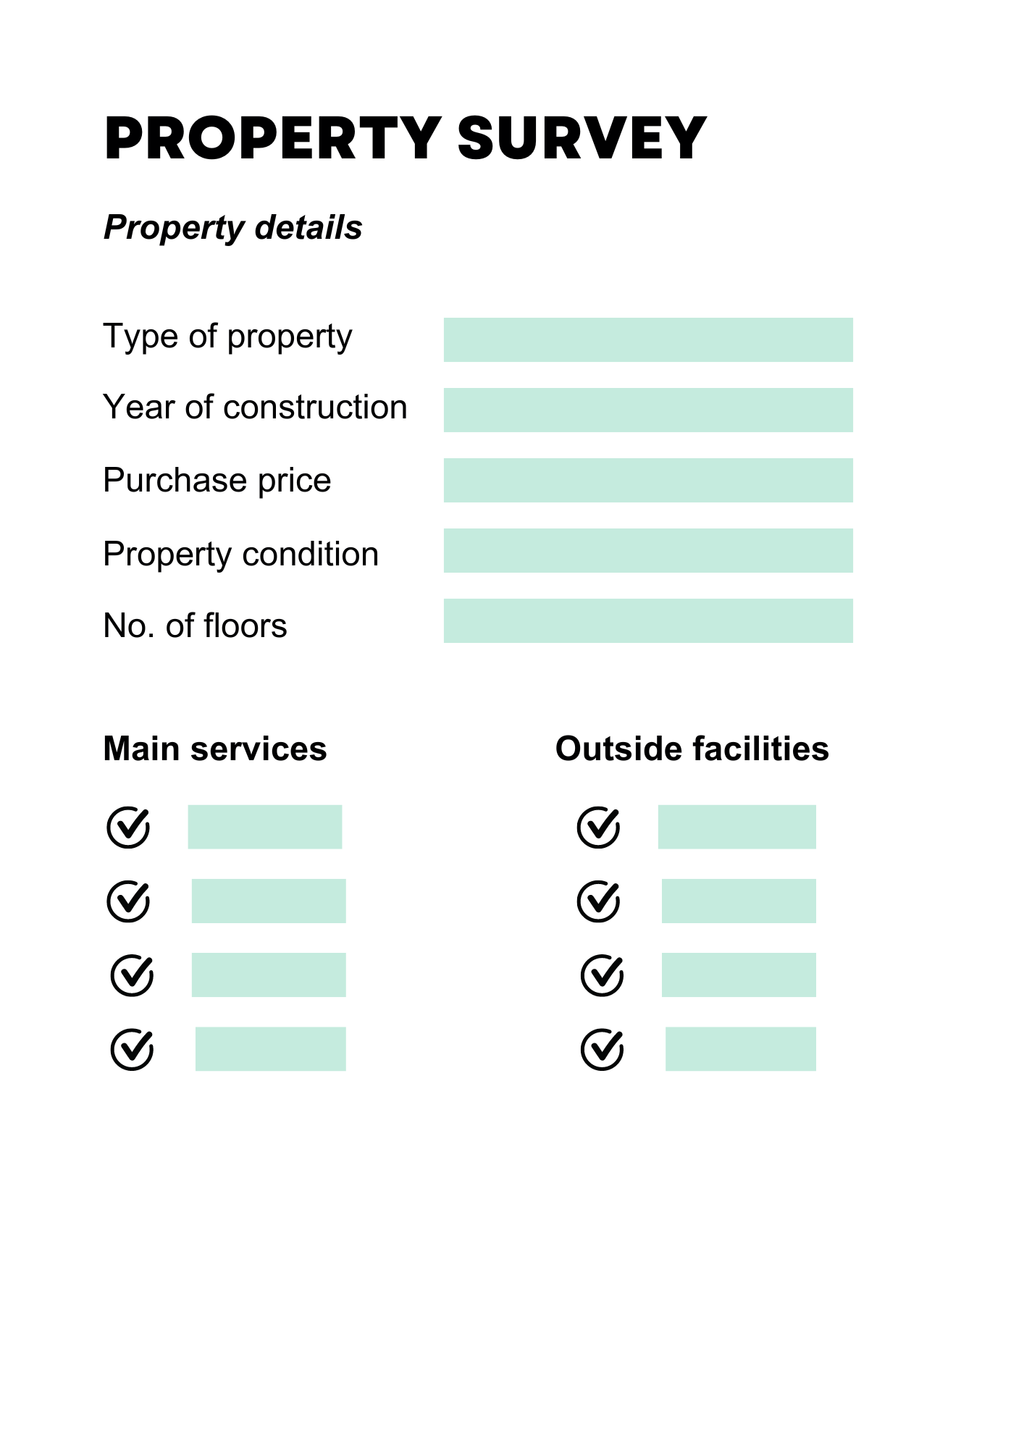 a visual representing a standard property survey